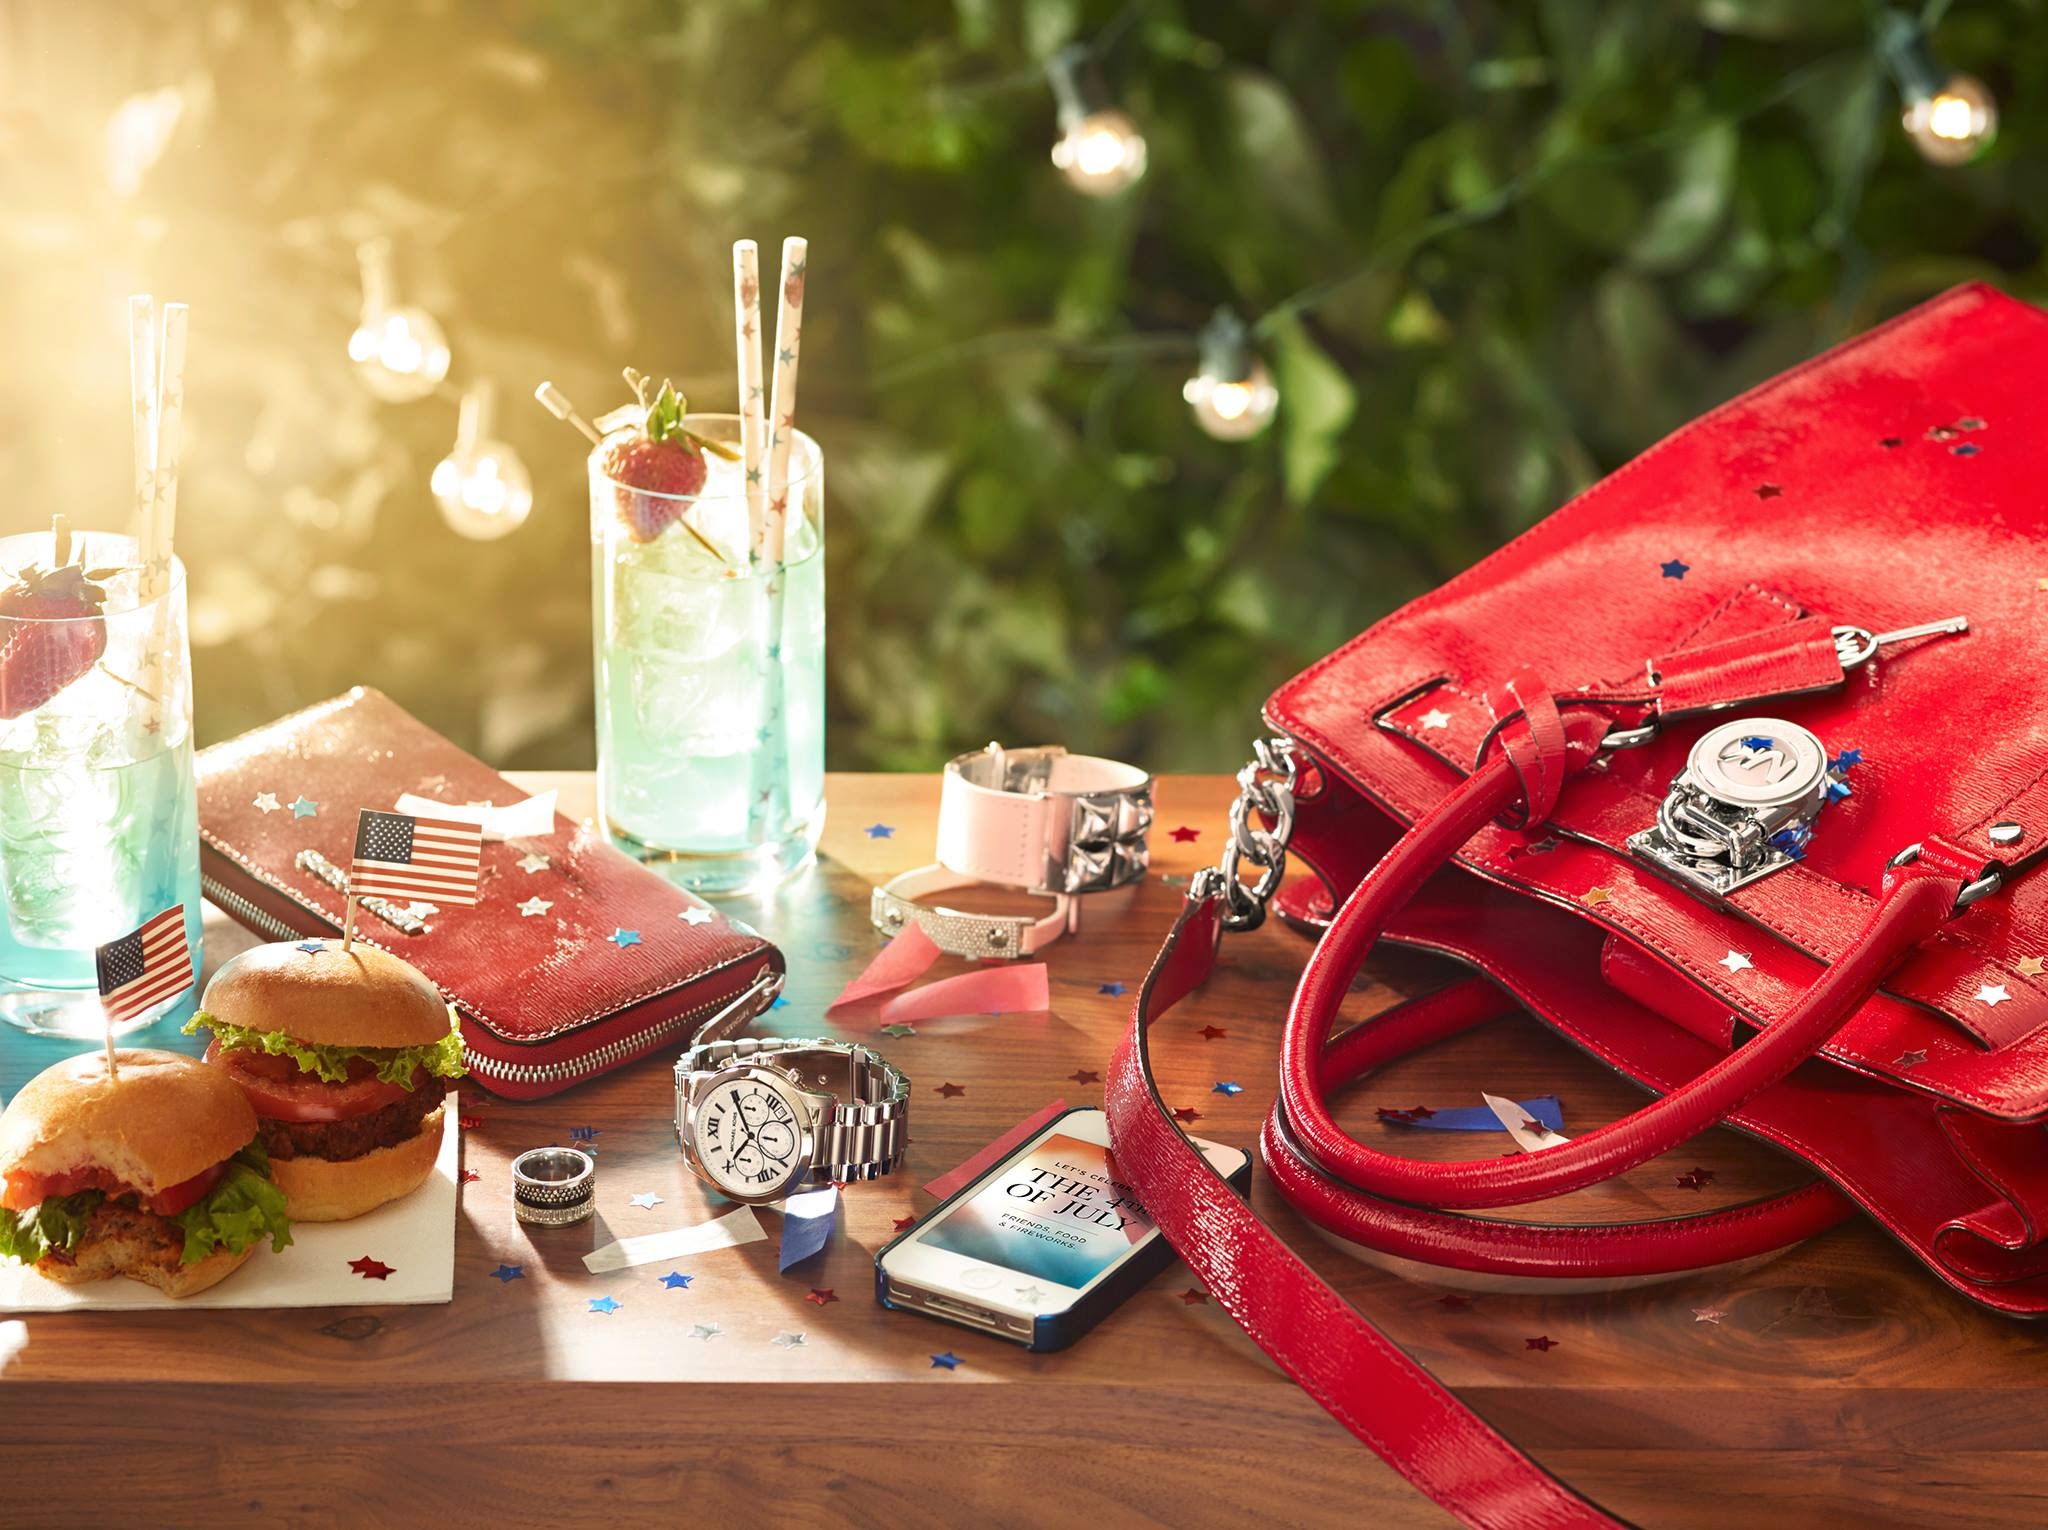 Top 10 Best-Selling Michael Kors Handbags - Luxury Fashion Online